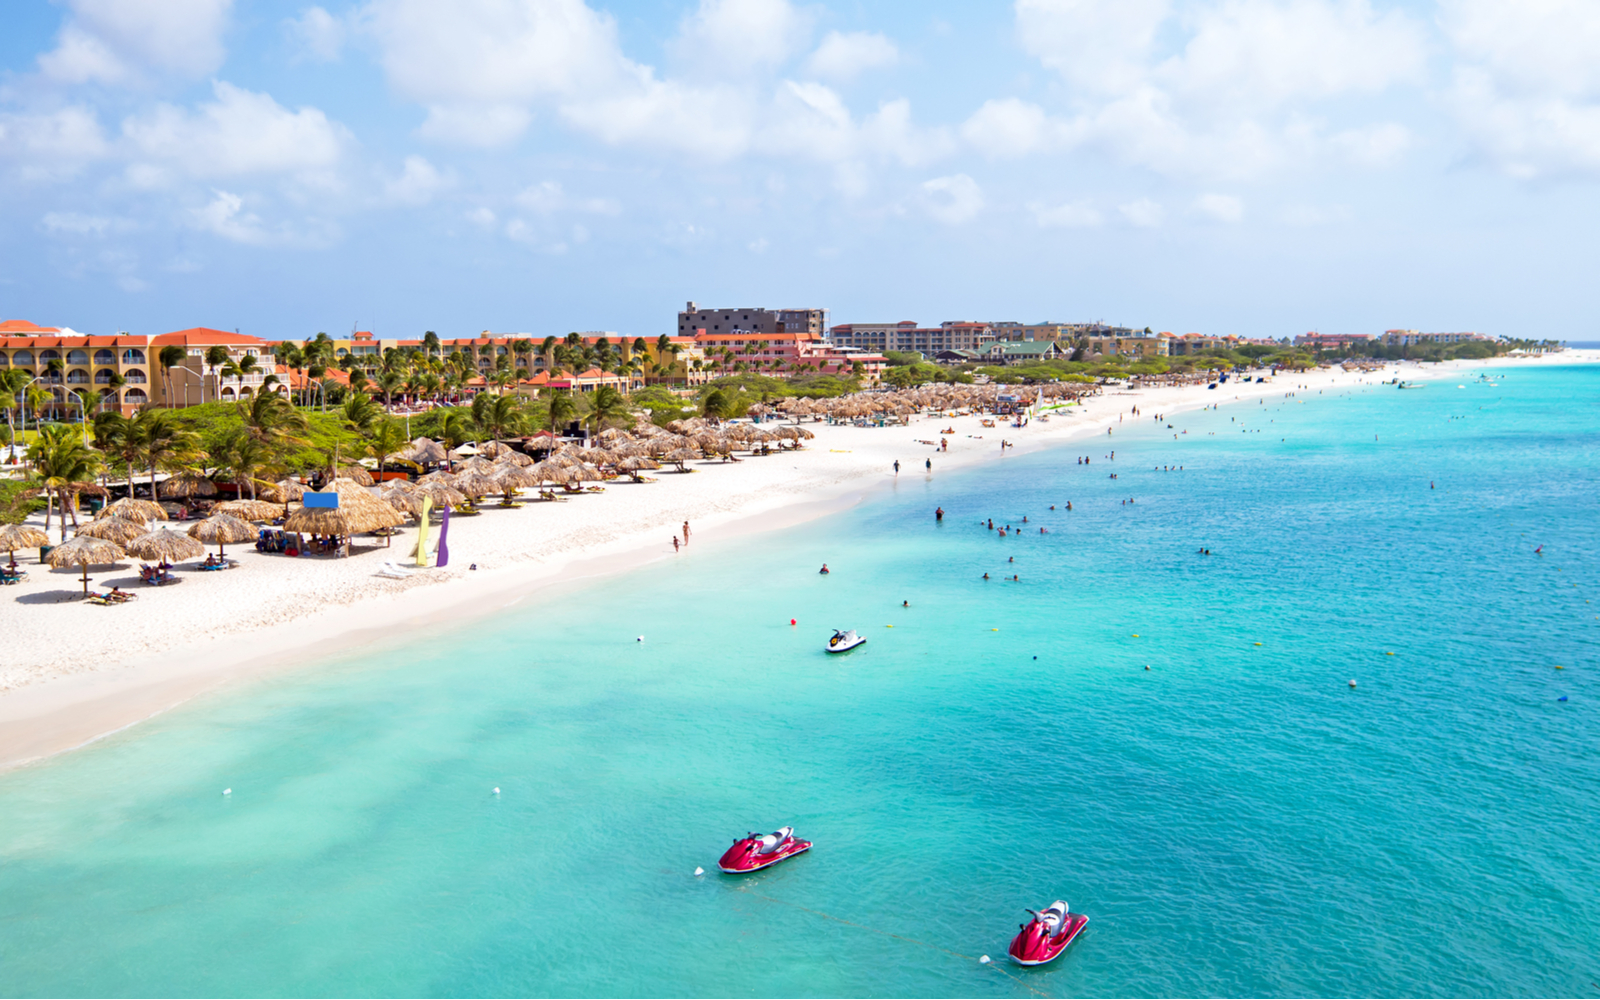 Is Aruba Safe? | Travel Tips & Safety Concerns